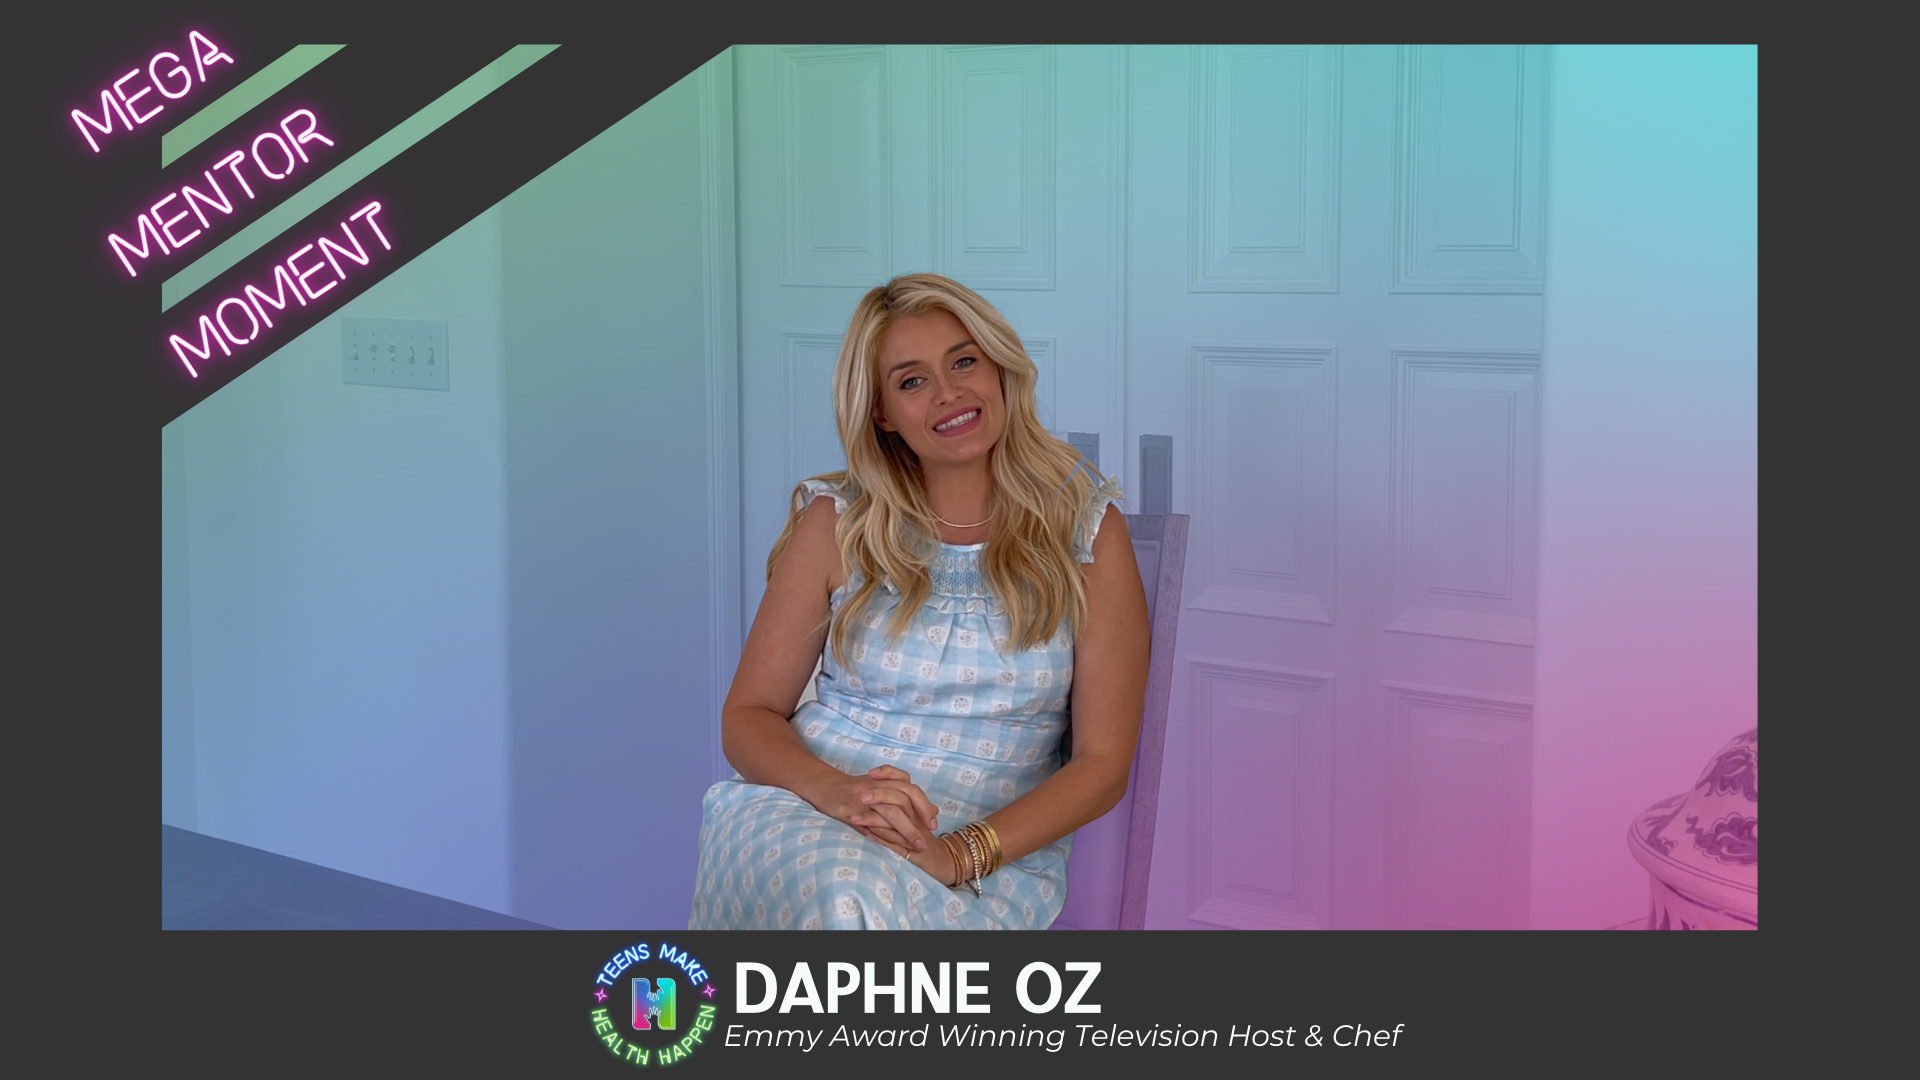 Mega Mentor Moment with Daphne Oz